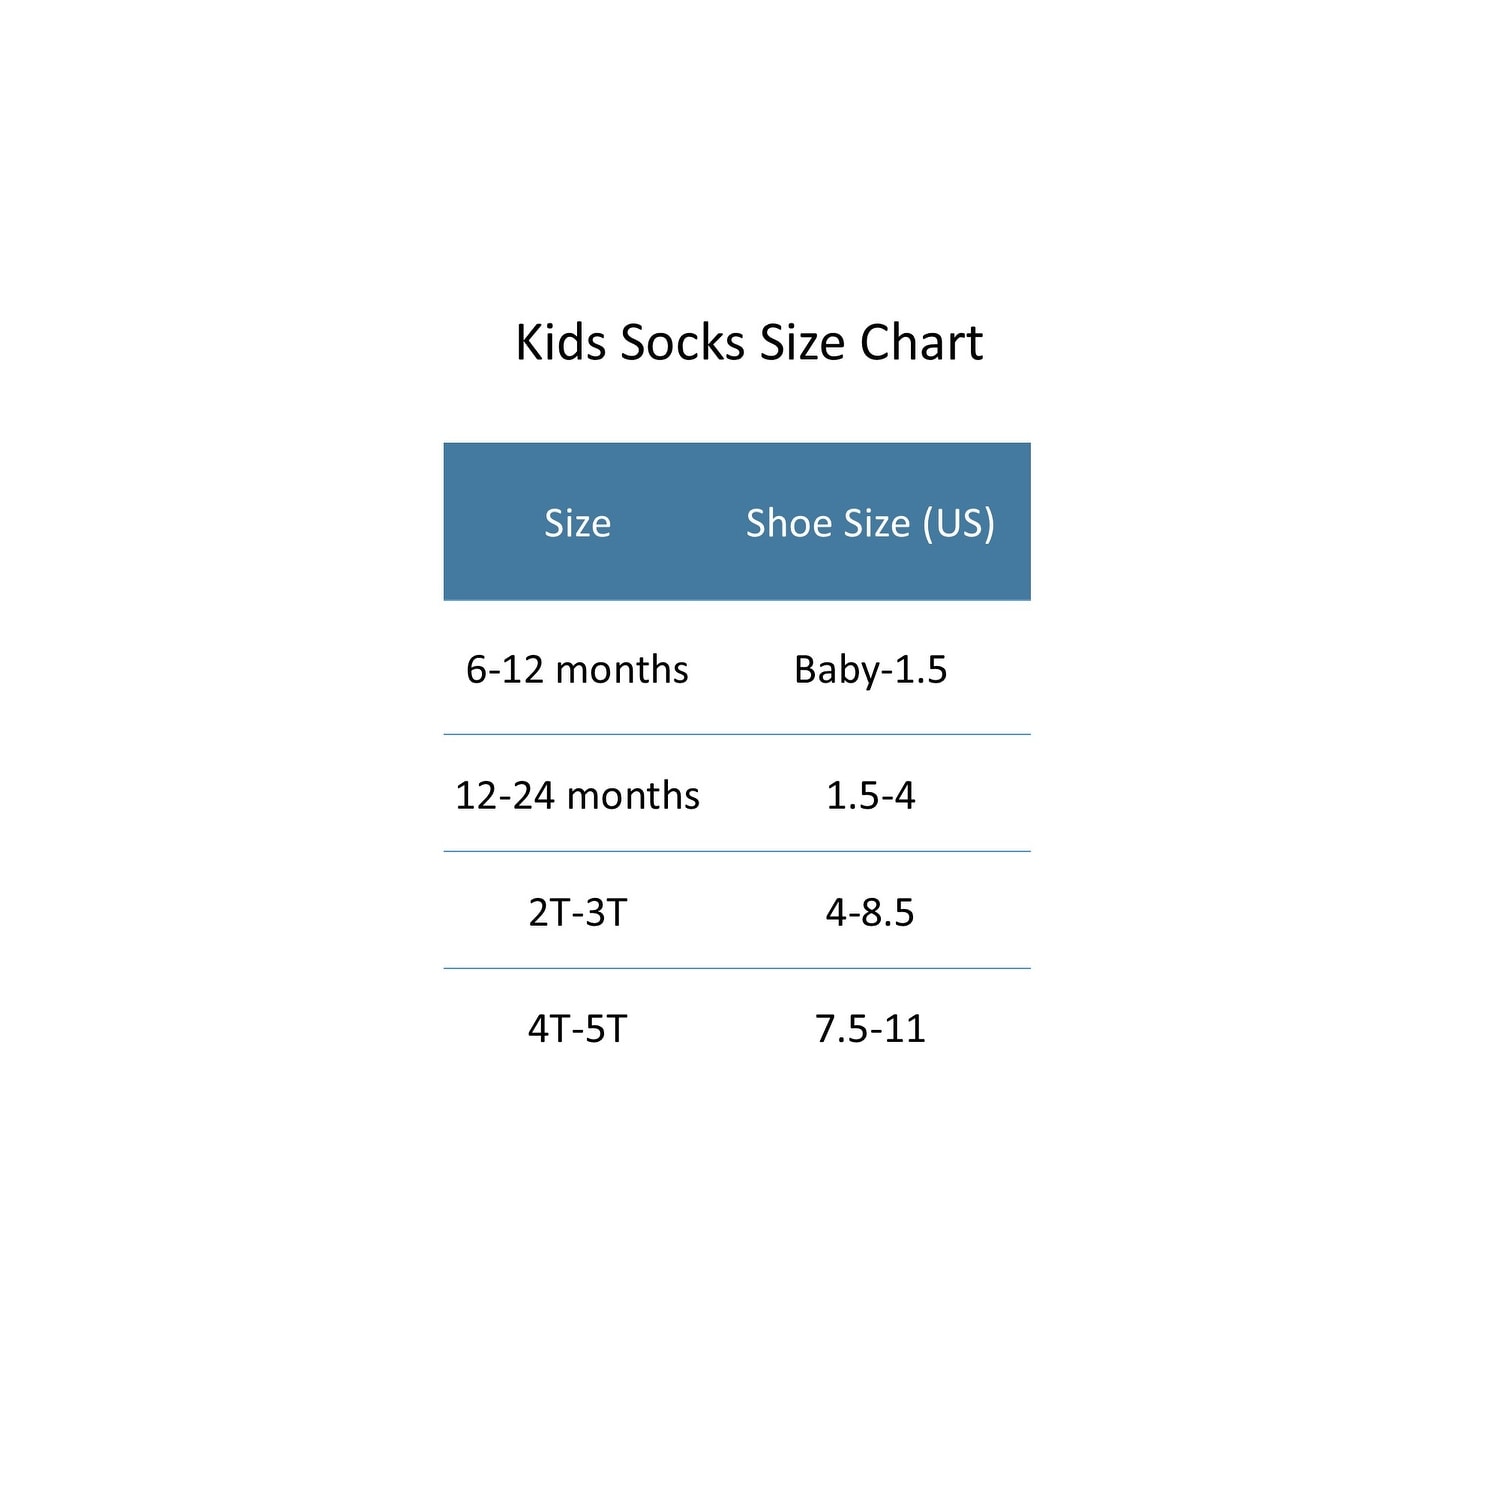 Hanes Toddler Socks Size Chart